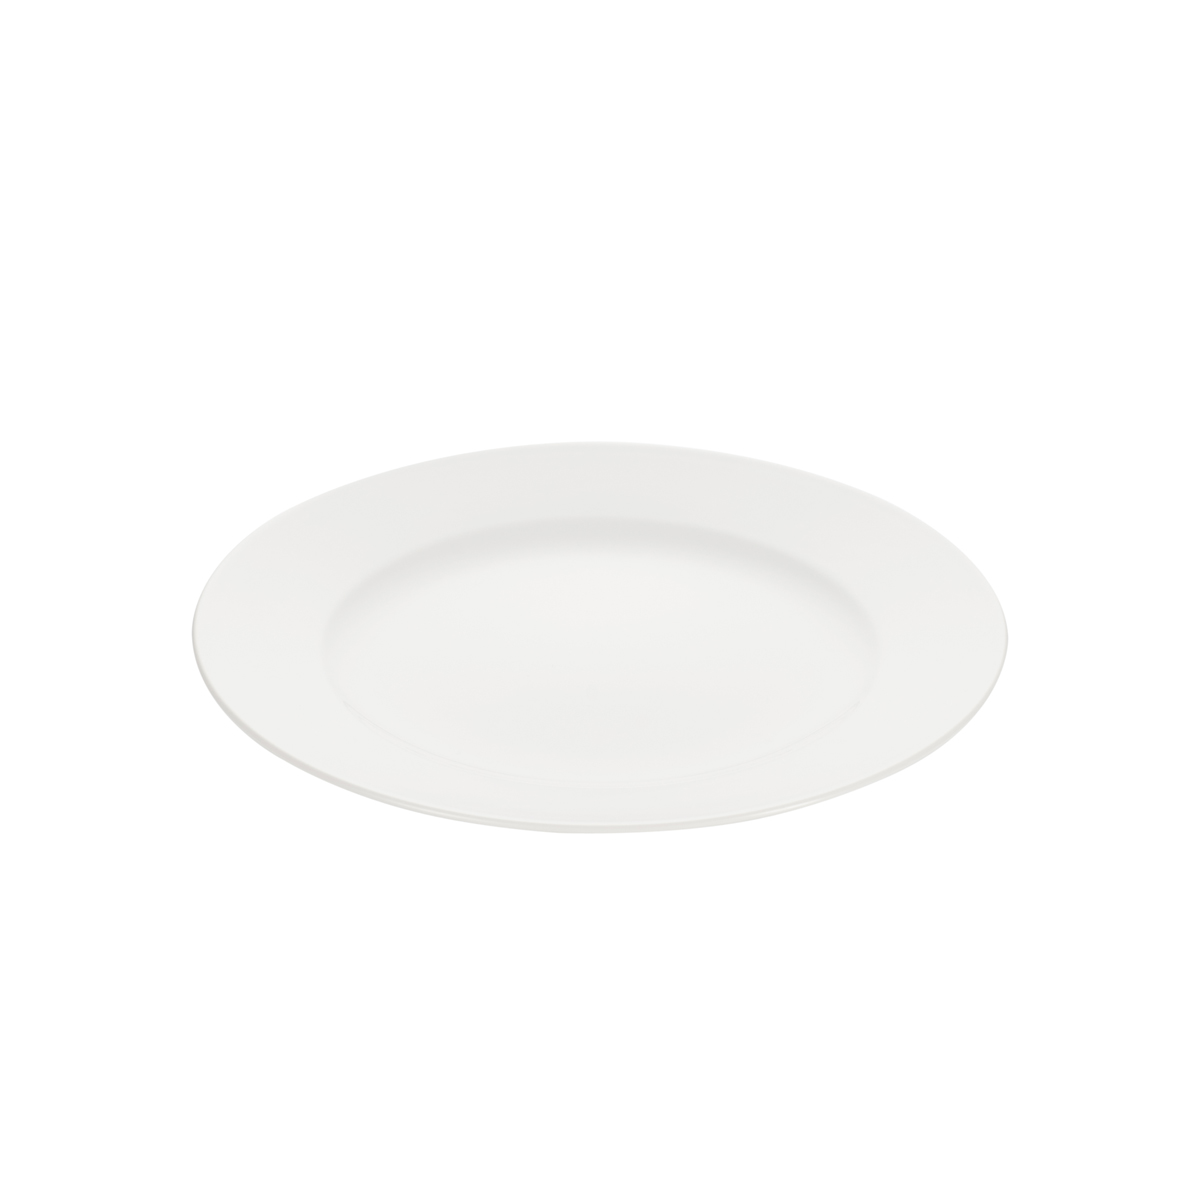 Плоская тарелка Gipfel Classique 50907 30 см тарелка gipfel civetta 3961 16 см